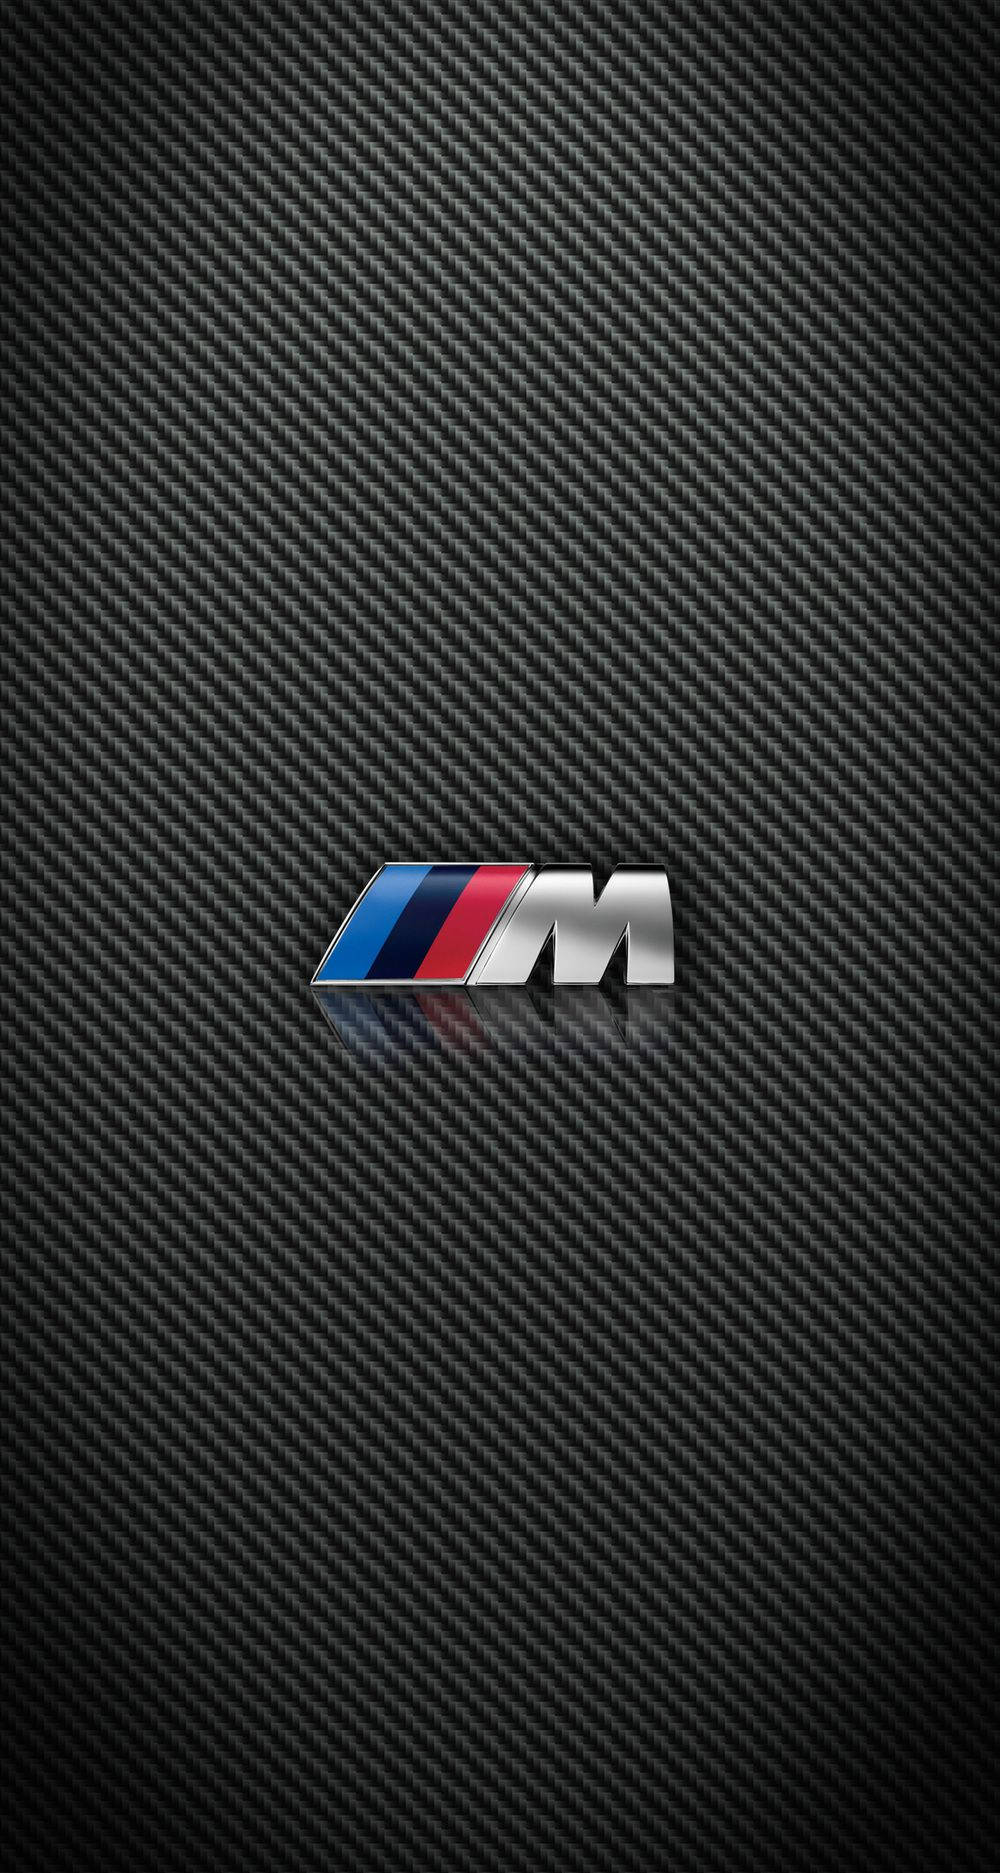 M3carbon-logo Bmw Iphone X. Wallpaper